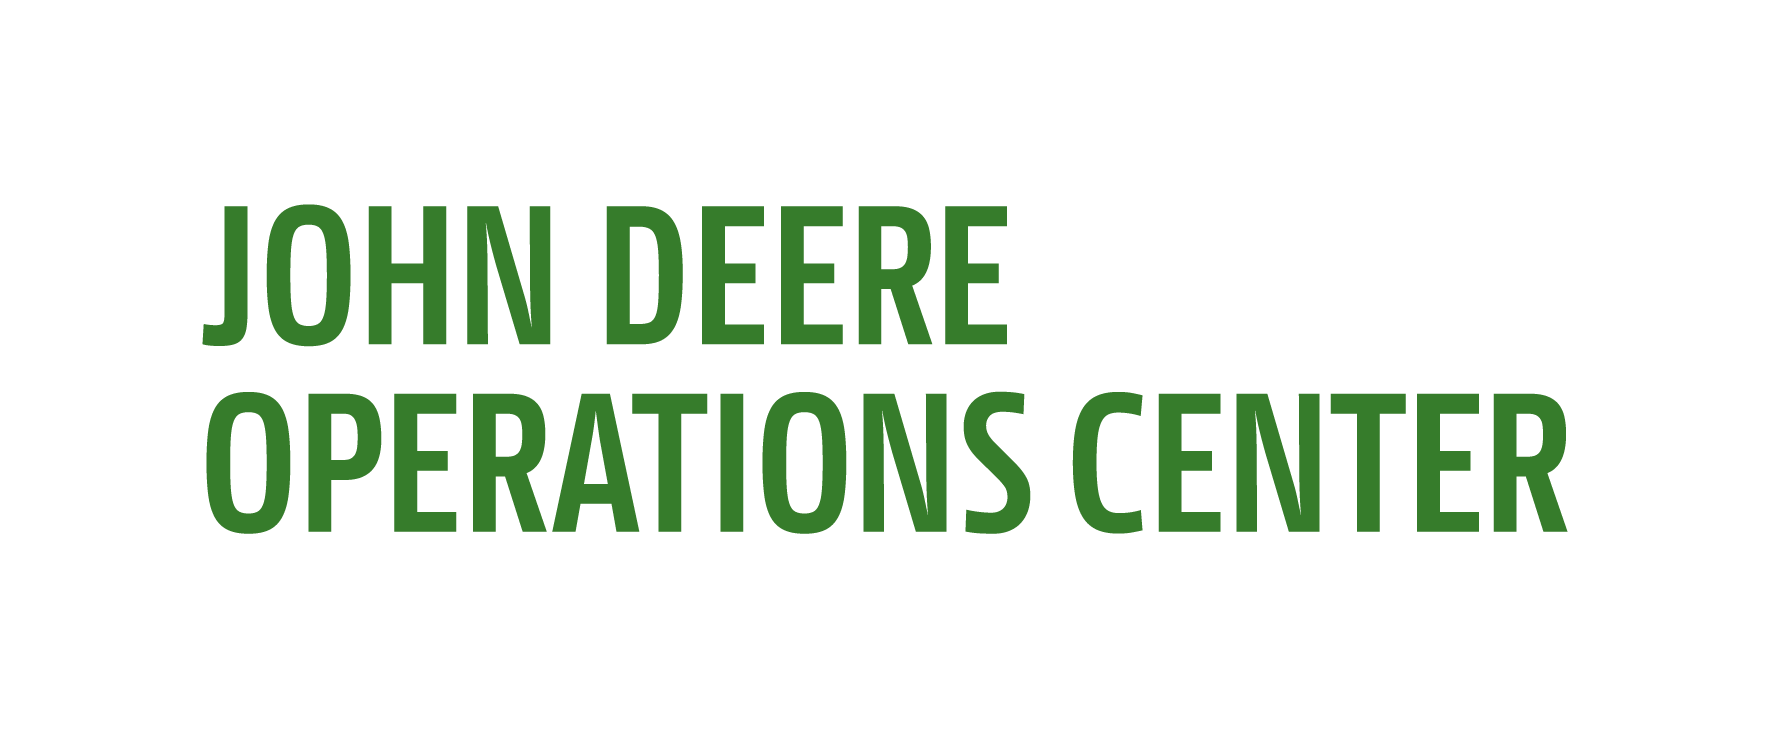 Icon representing John Deere Operations Center